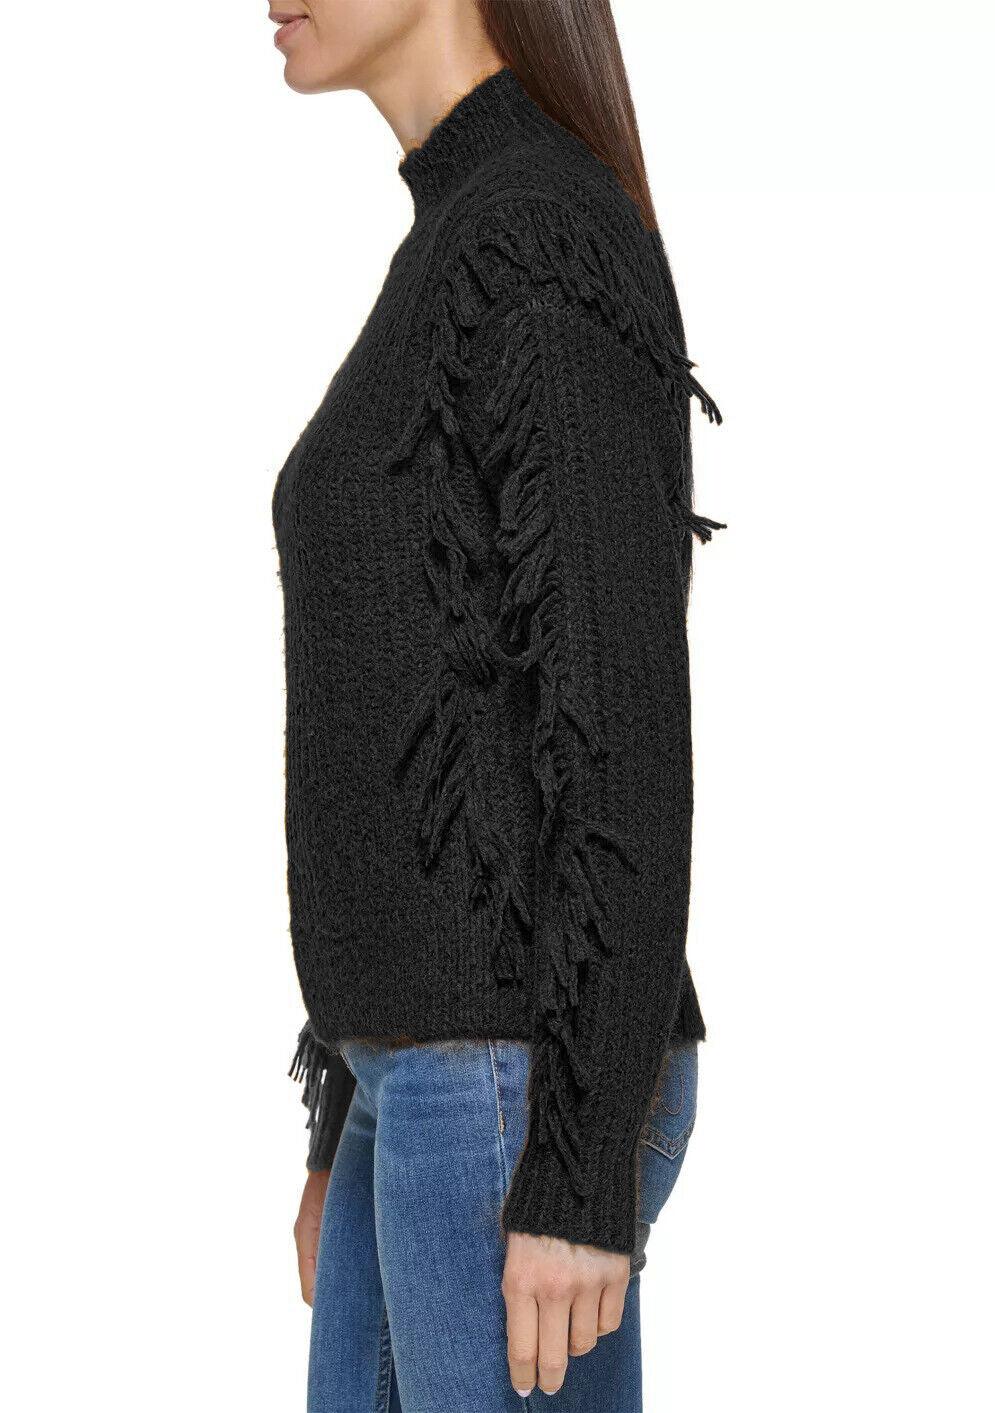 Calvin Klein Women's Knitted Fringe Mock Neck Sweater Black Size S - SVNYFancy